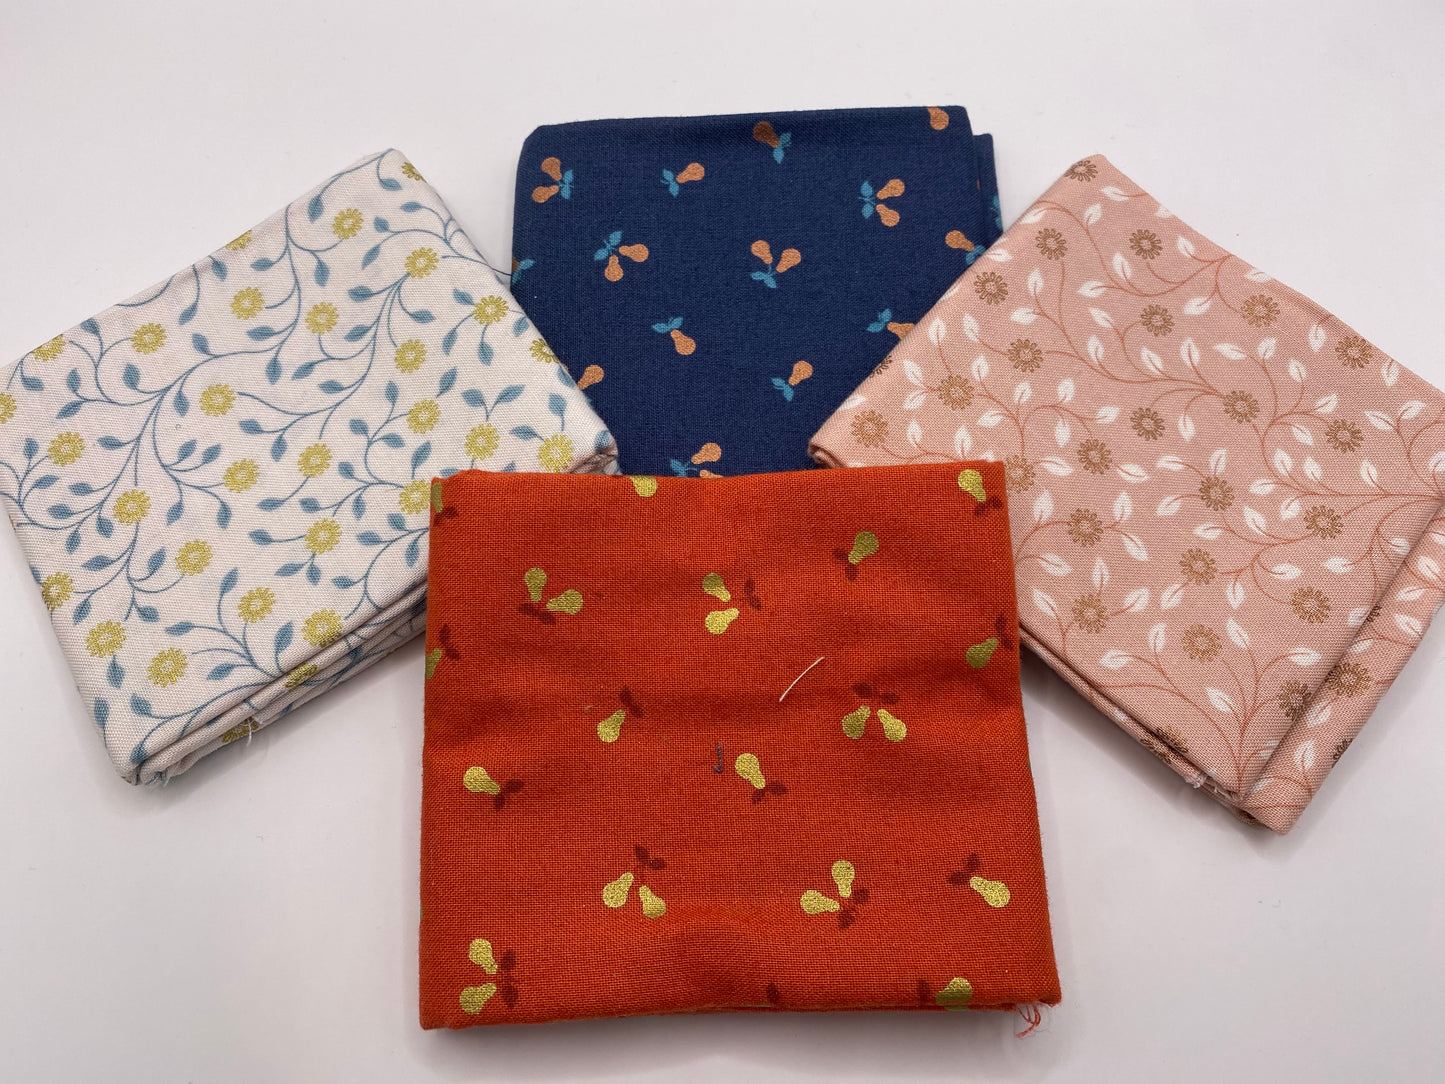 Fabric Fat Quarter Bundle - 'Pears' - 100% Cotton Fabric